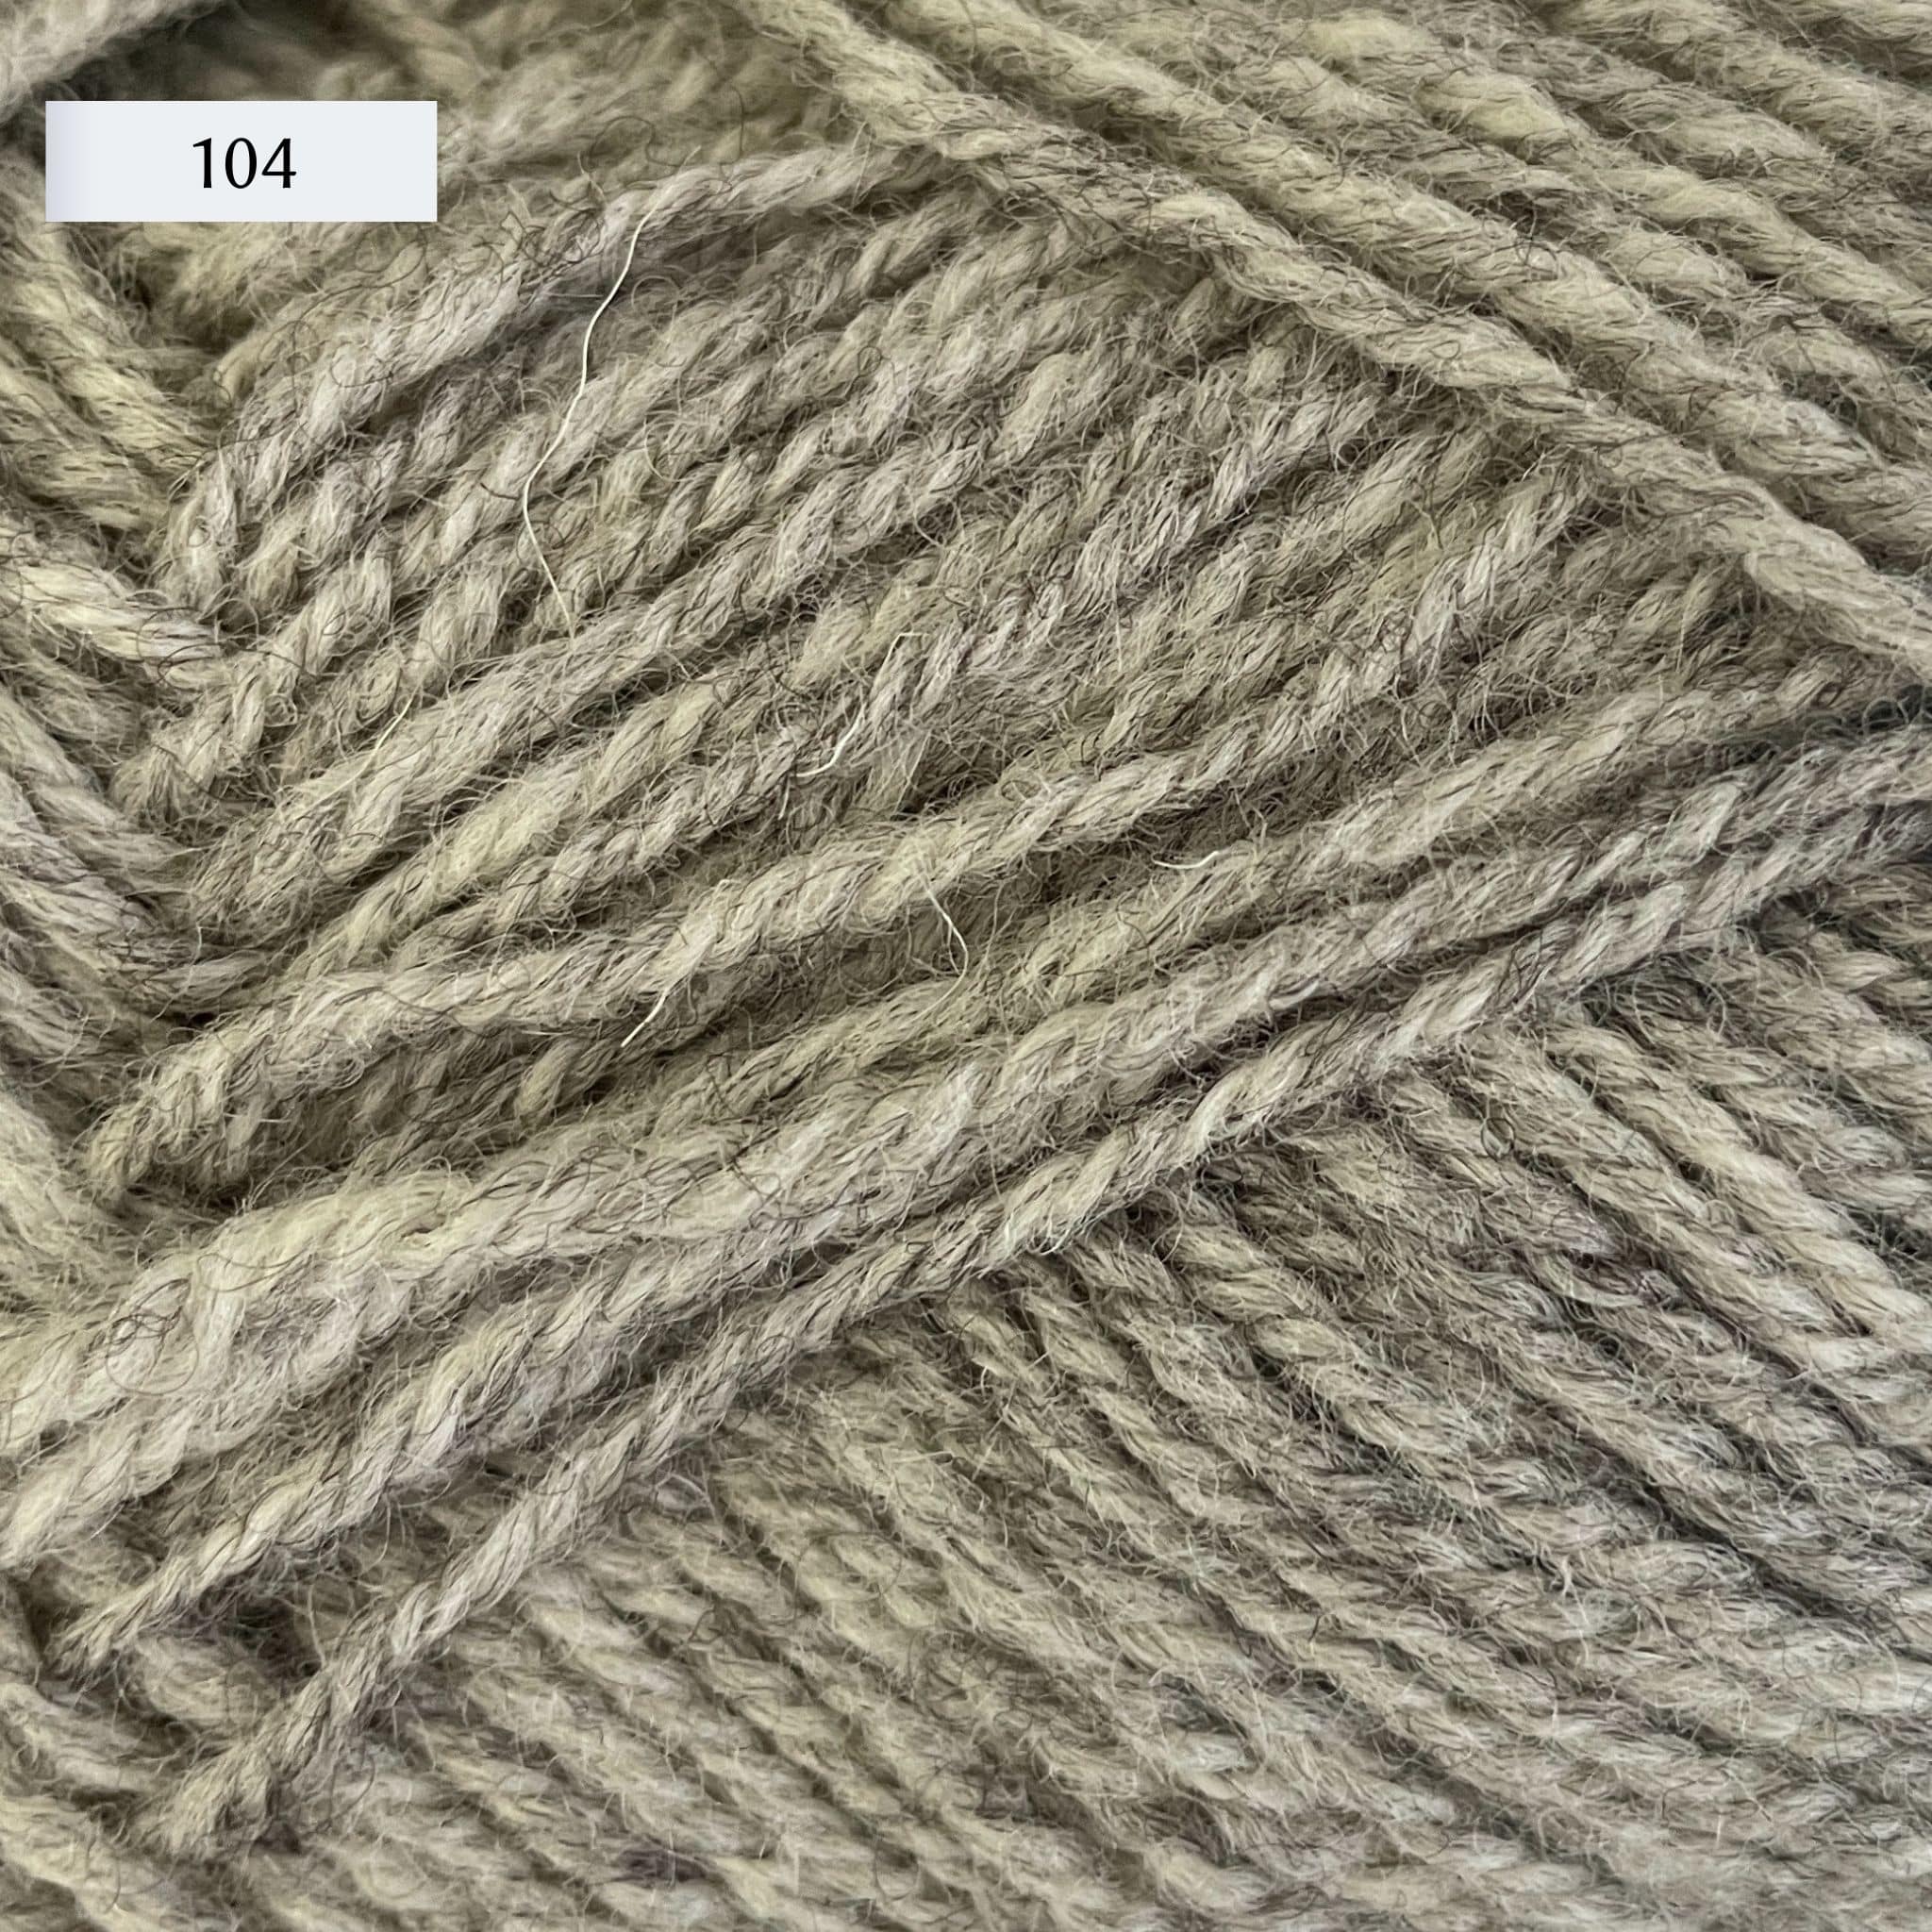 Rauma Strikkegarn, DK weight yarn, in color 104, a light heathered cool grey